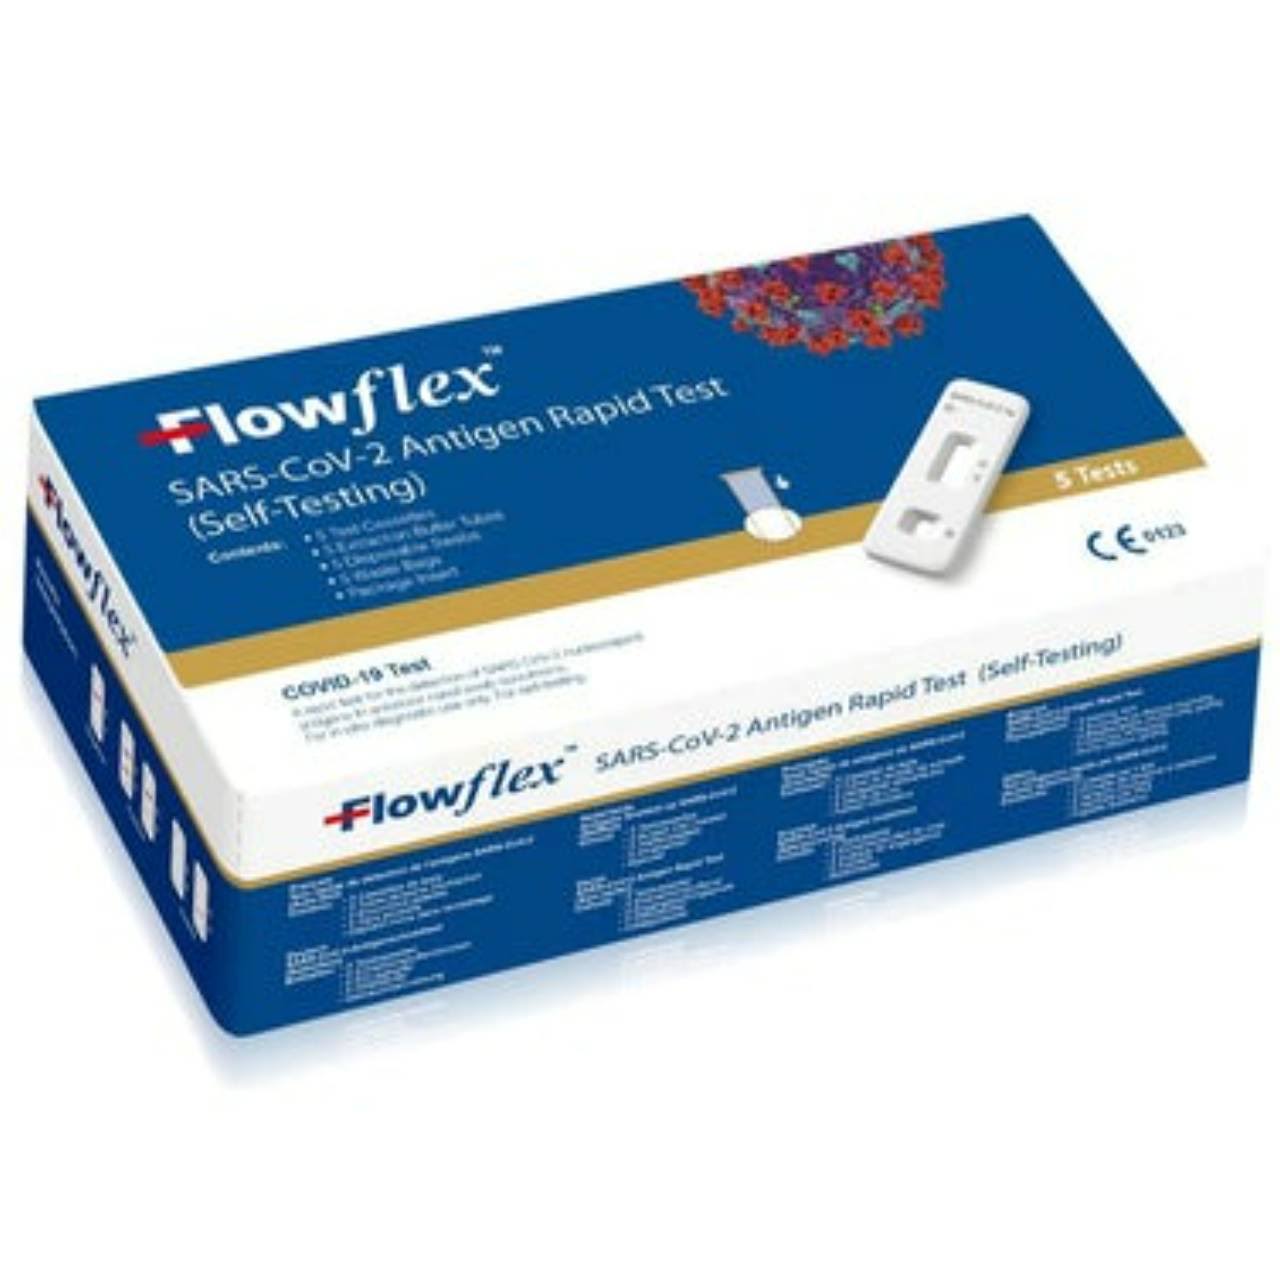 Flowflex Sars Antigen Rapid Test 5 Pack